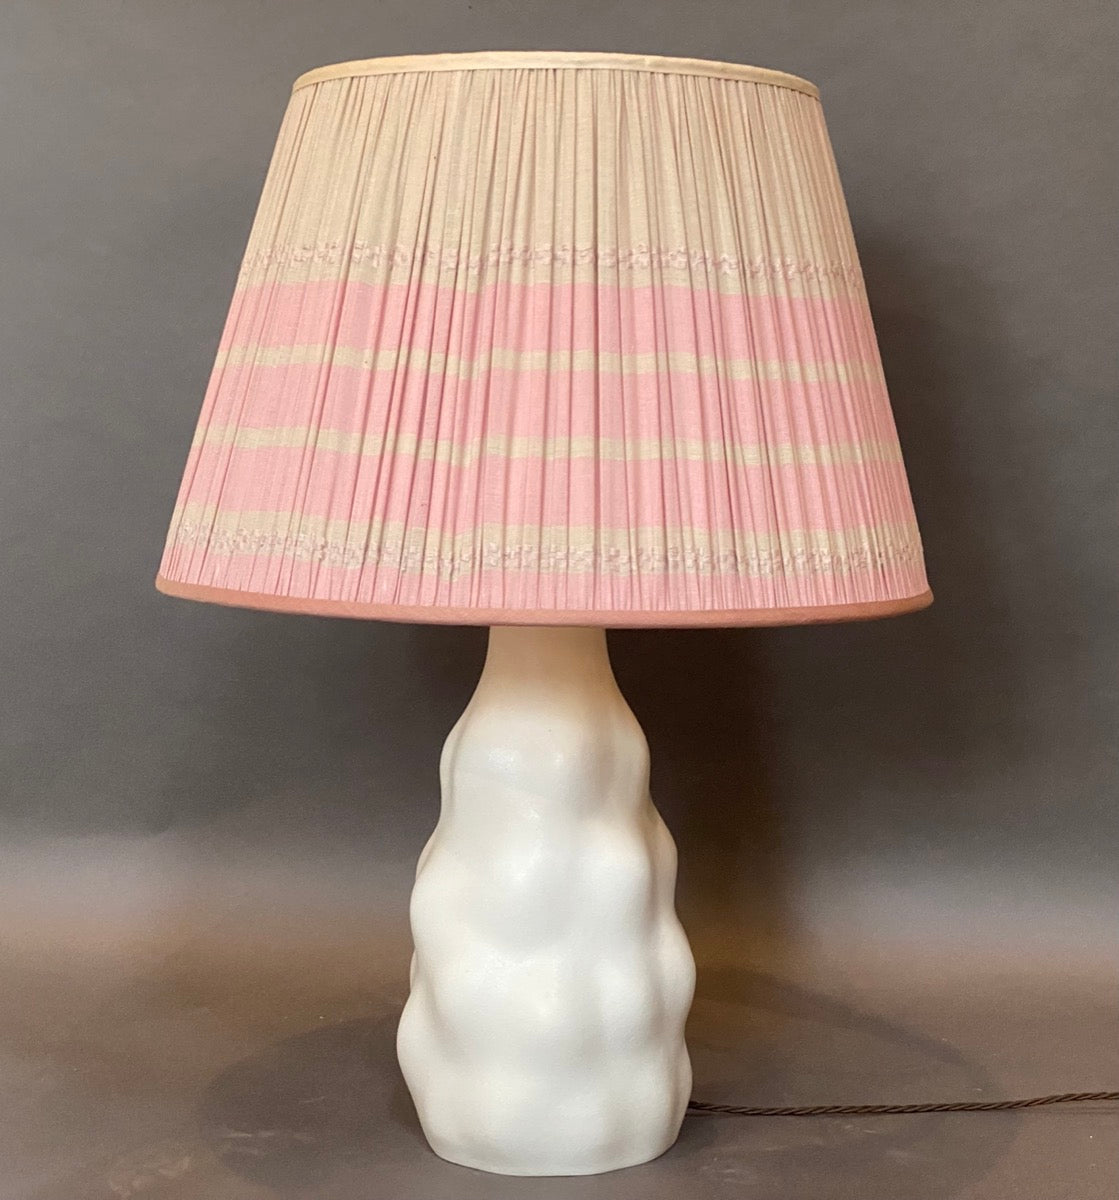 Assam pink cotton lampshade on IKI lamp